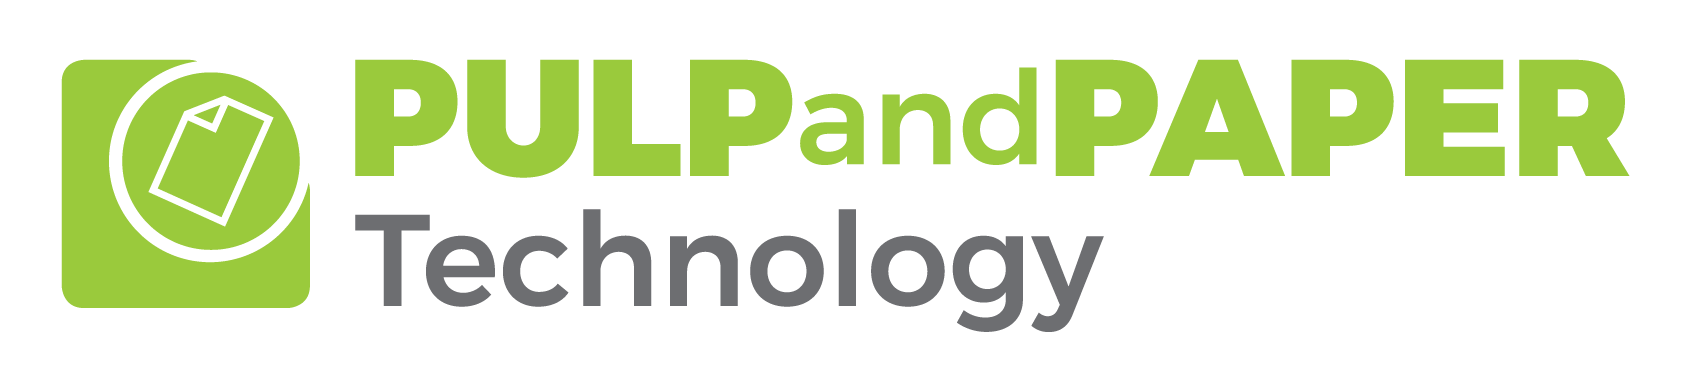 PulpandPaper_Technology_logo